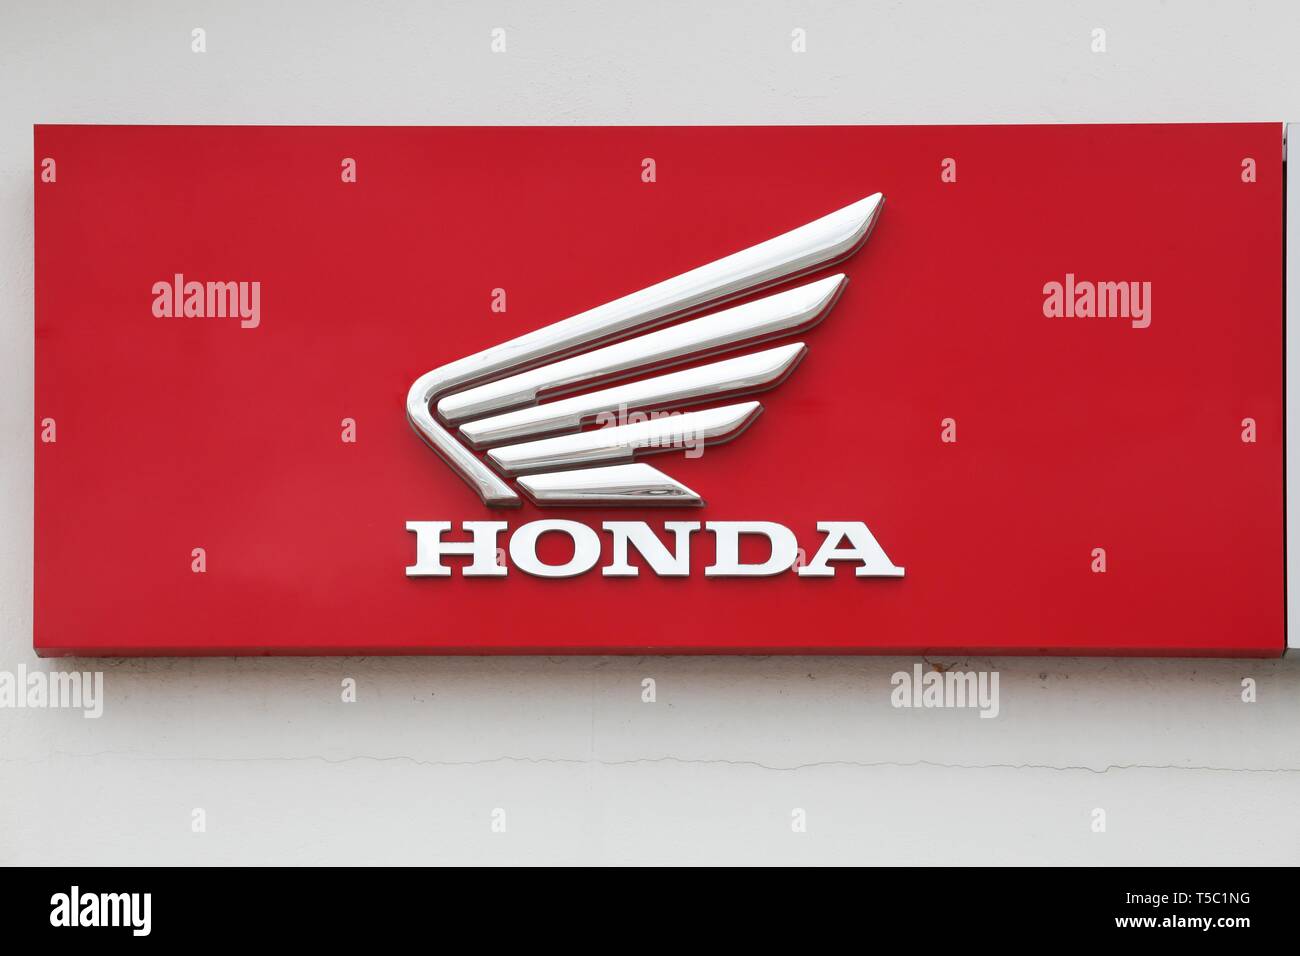 Honda motorcycle japan -Fotos und -Bildmaterial in hoher Auflösung – Alamy